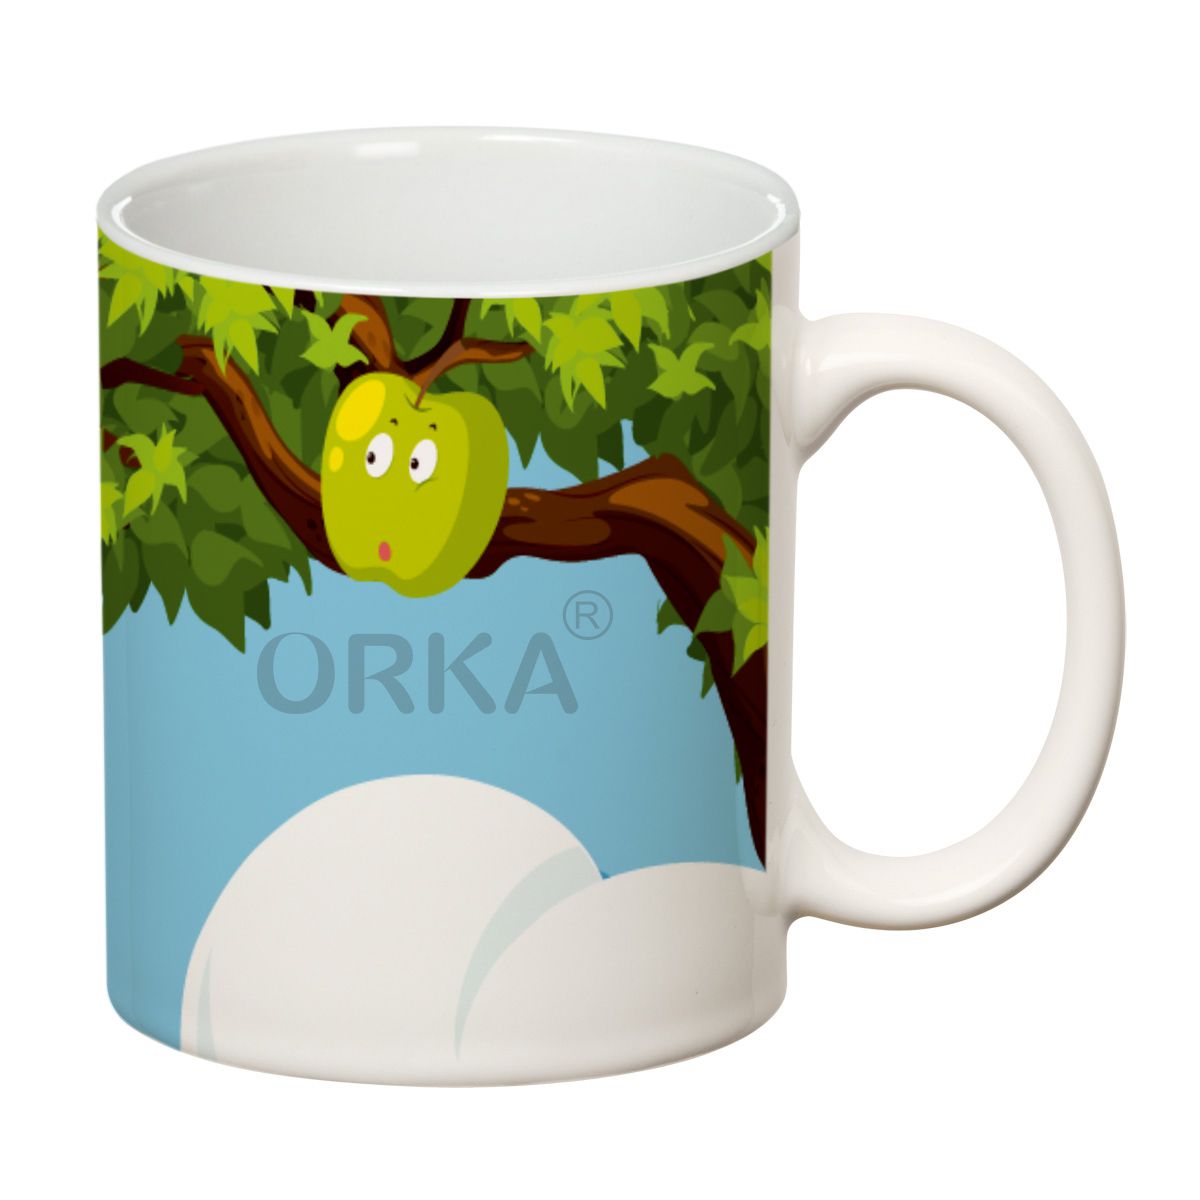 ORKA Coffee Mug Nature Printed(Green Apple) Theme 11 Oz   